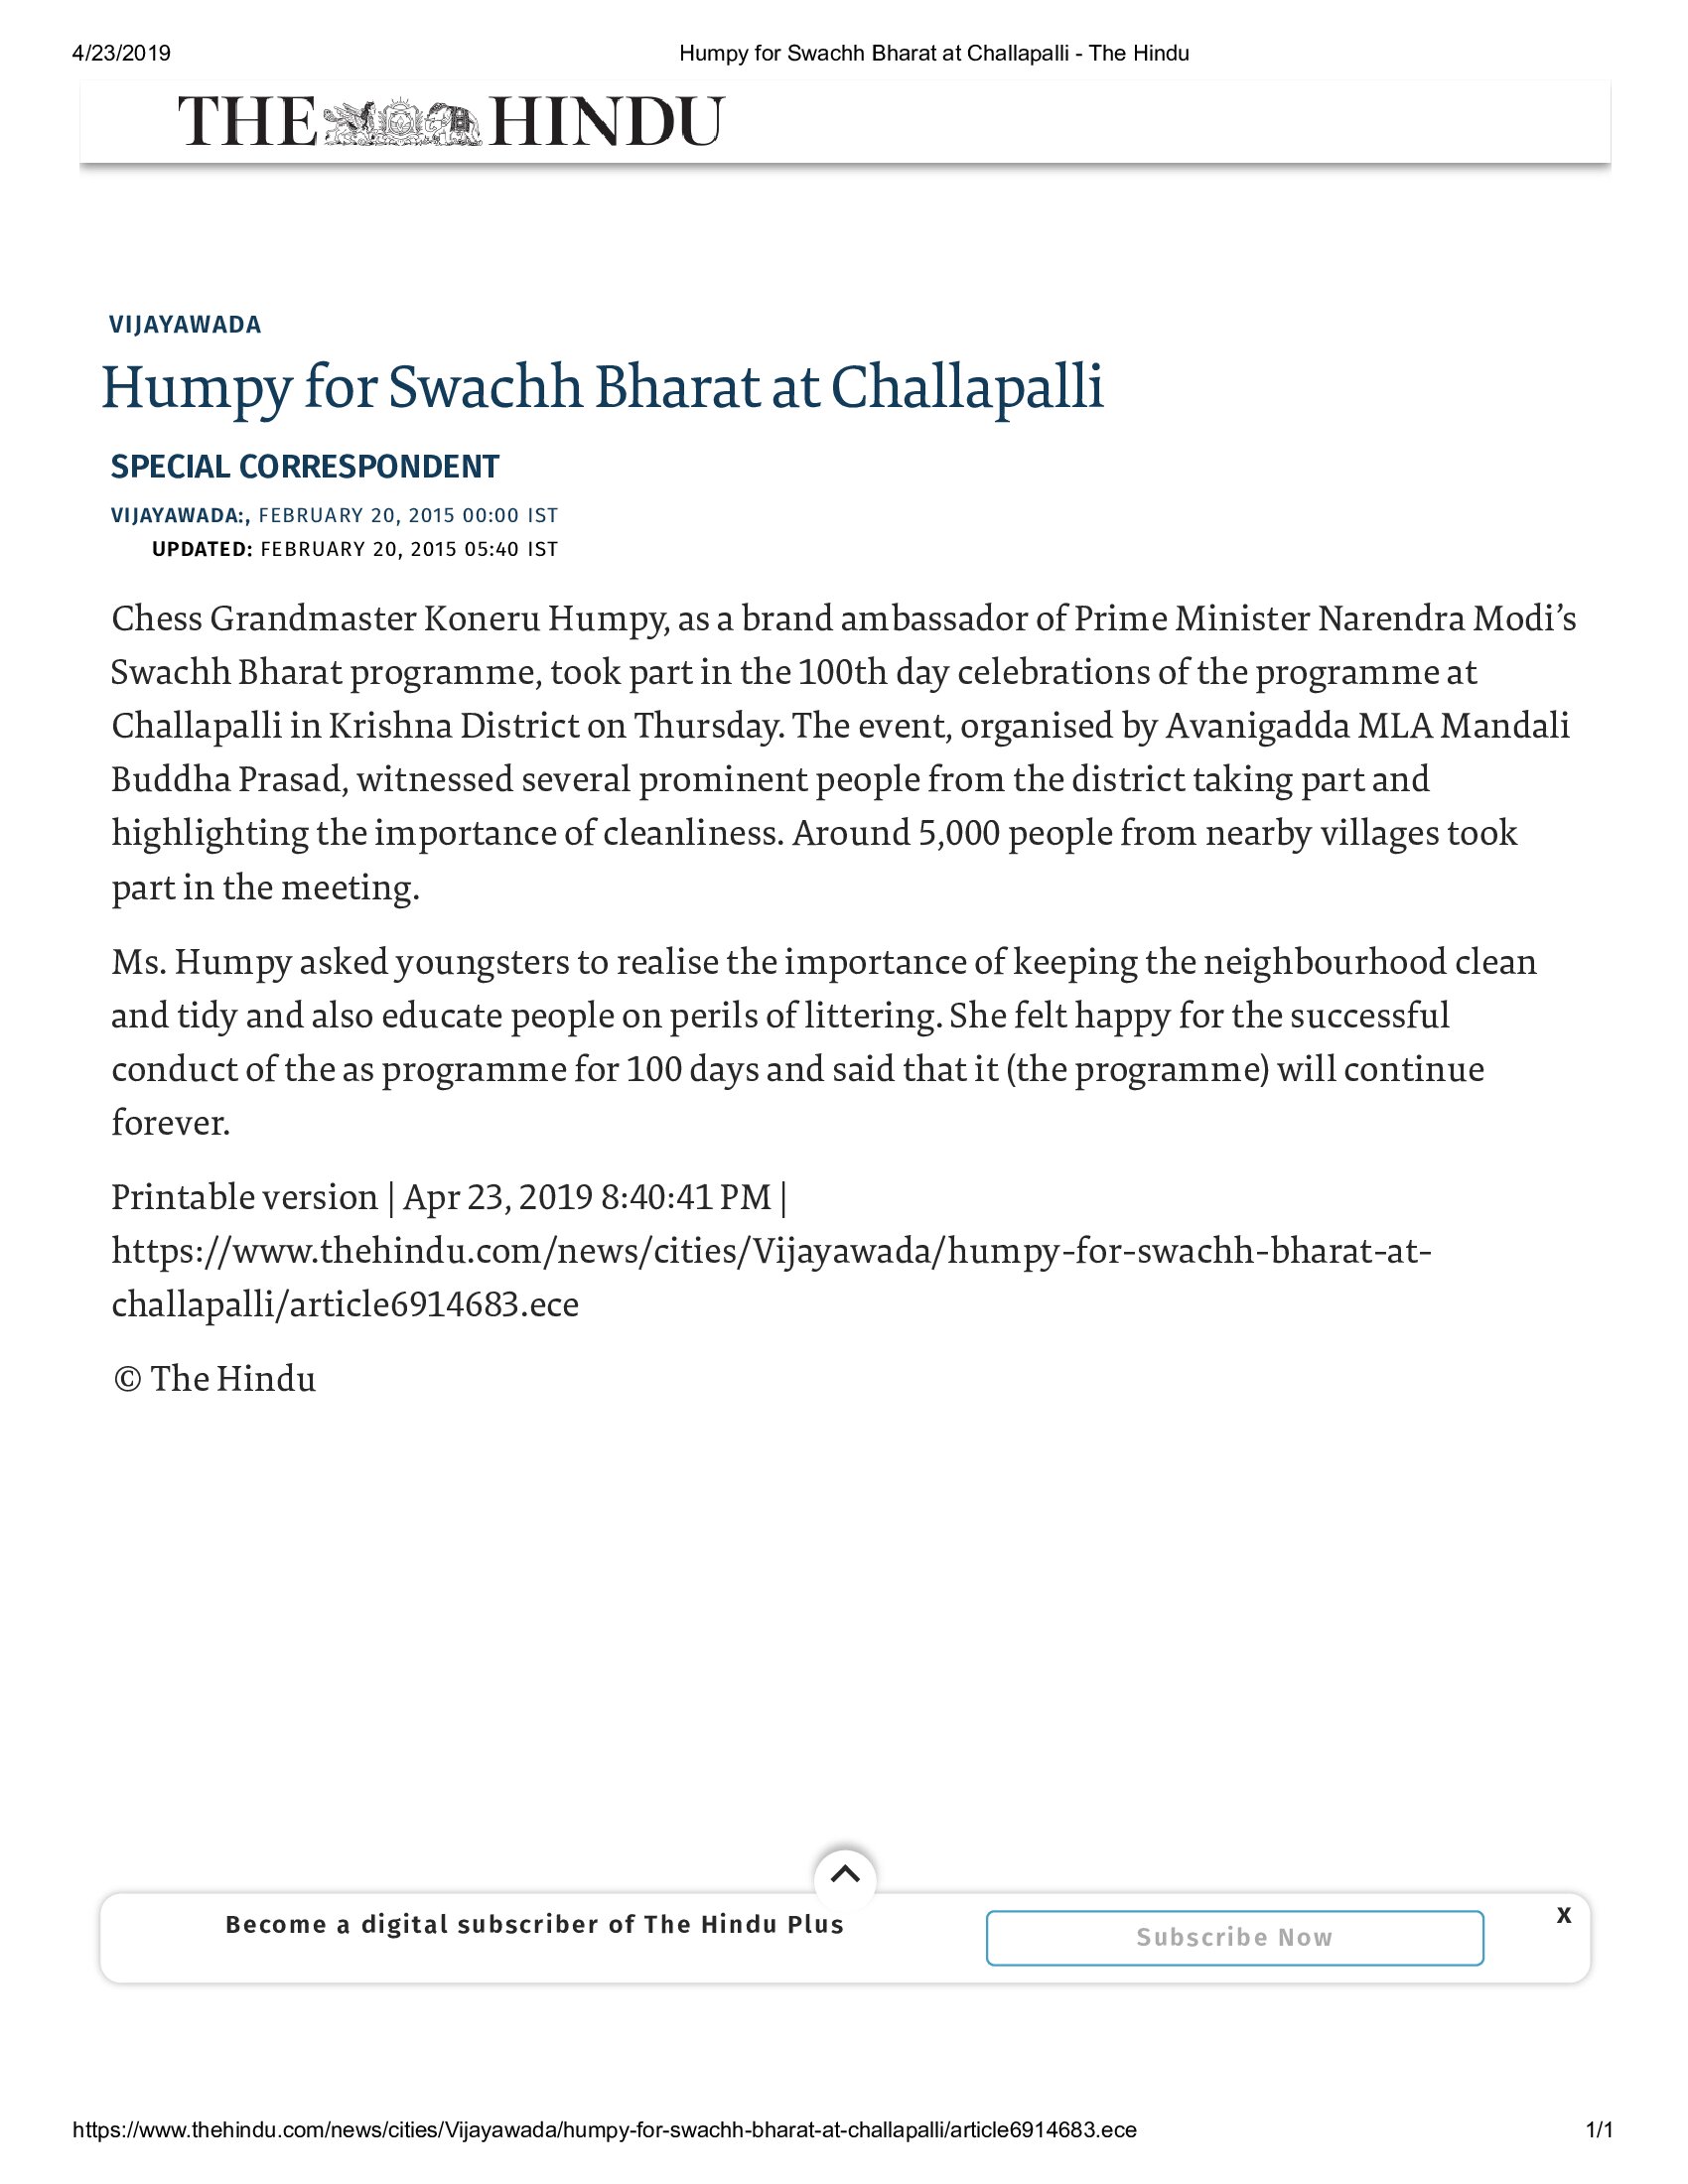 Humpy for Swachh Bharat at Challapalli - The Hindu